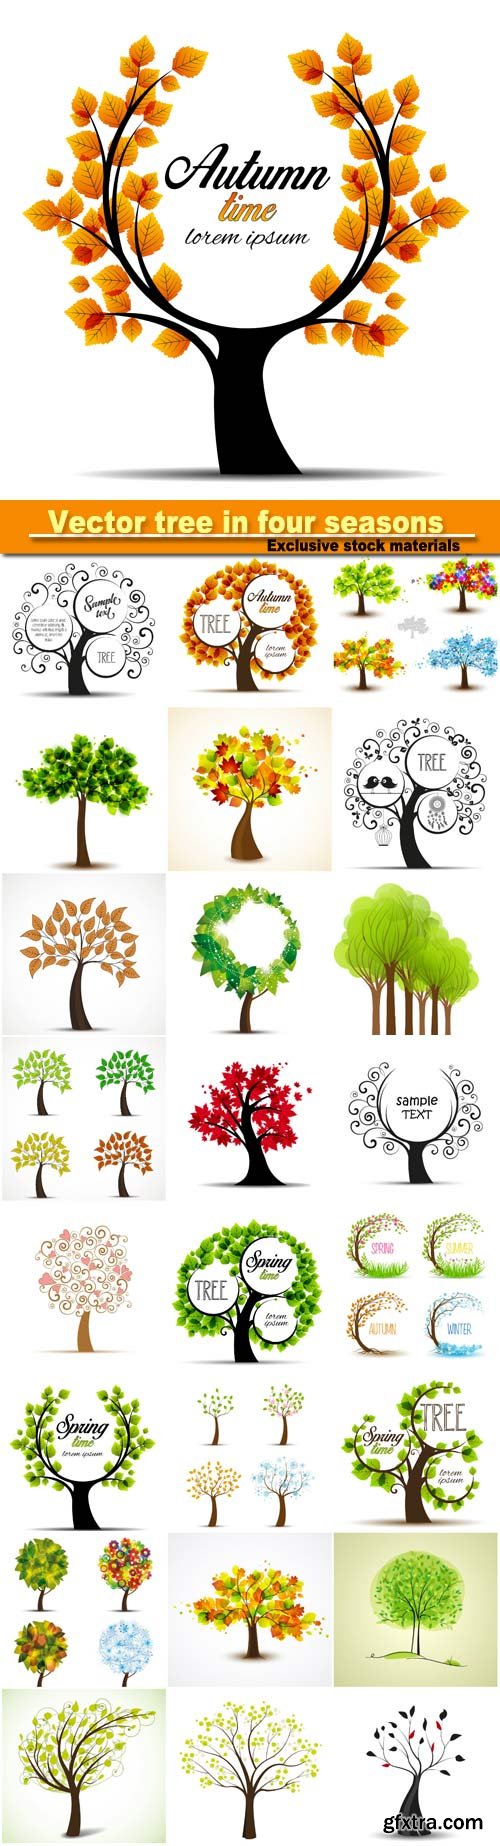 Vector tree in four seasons - spring, summer, autumn, winter